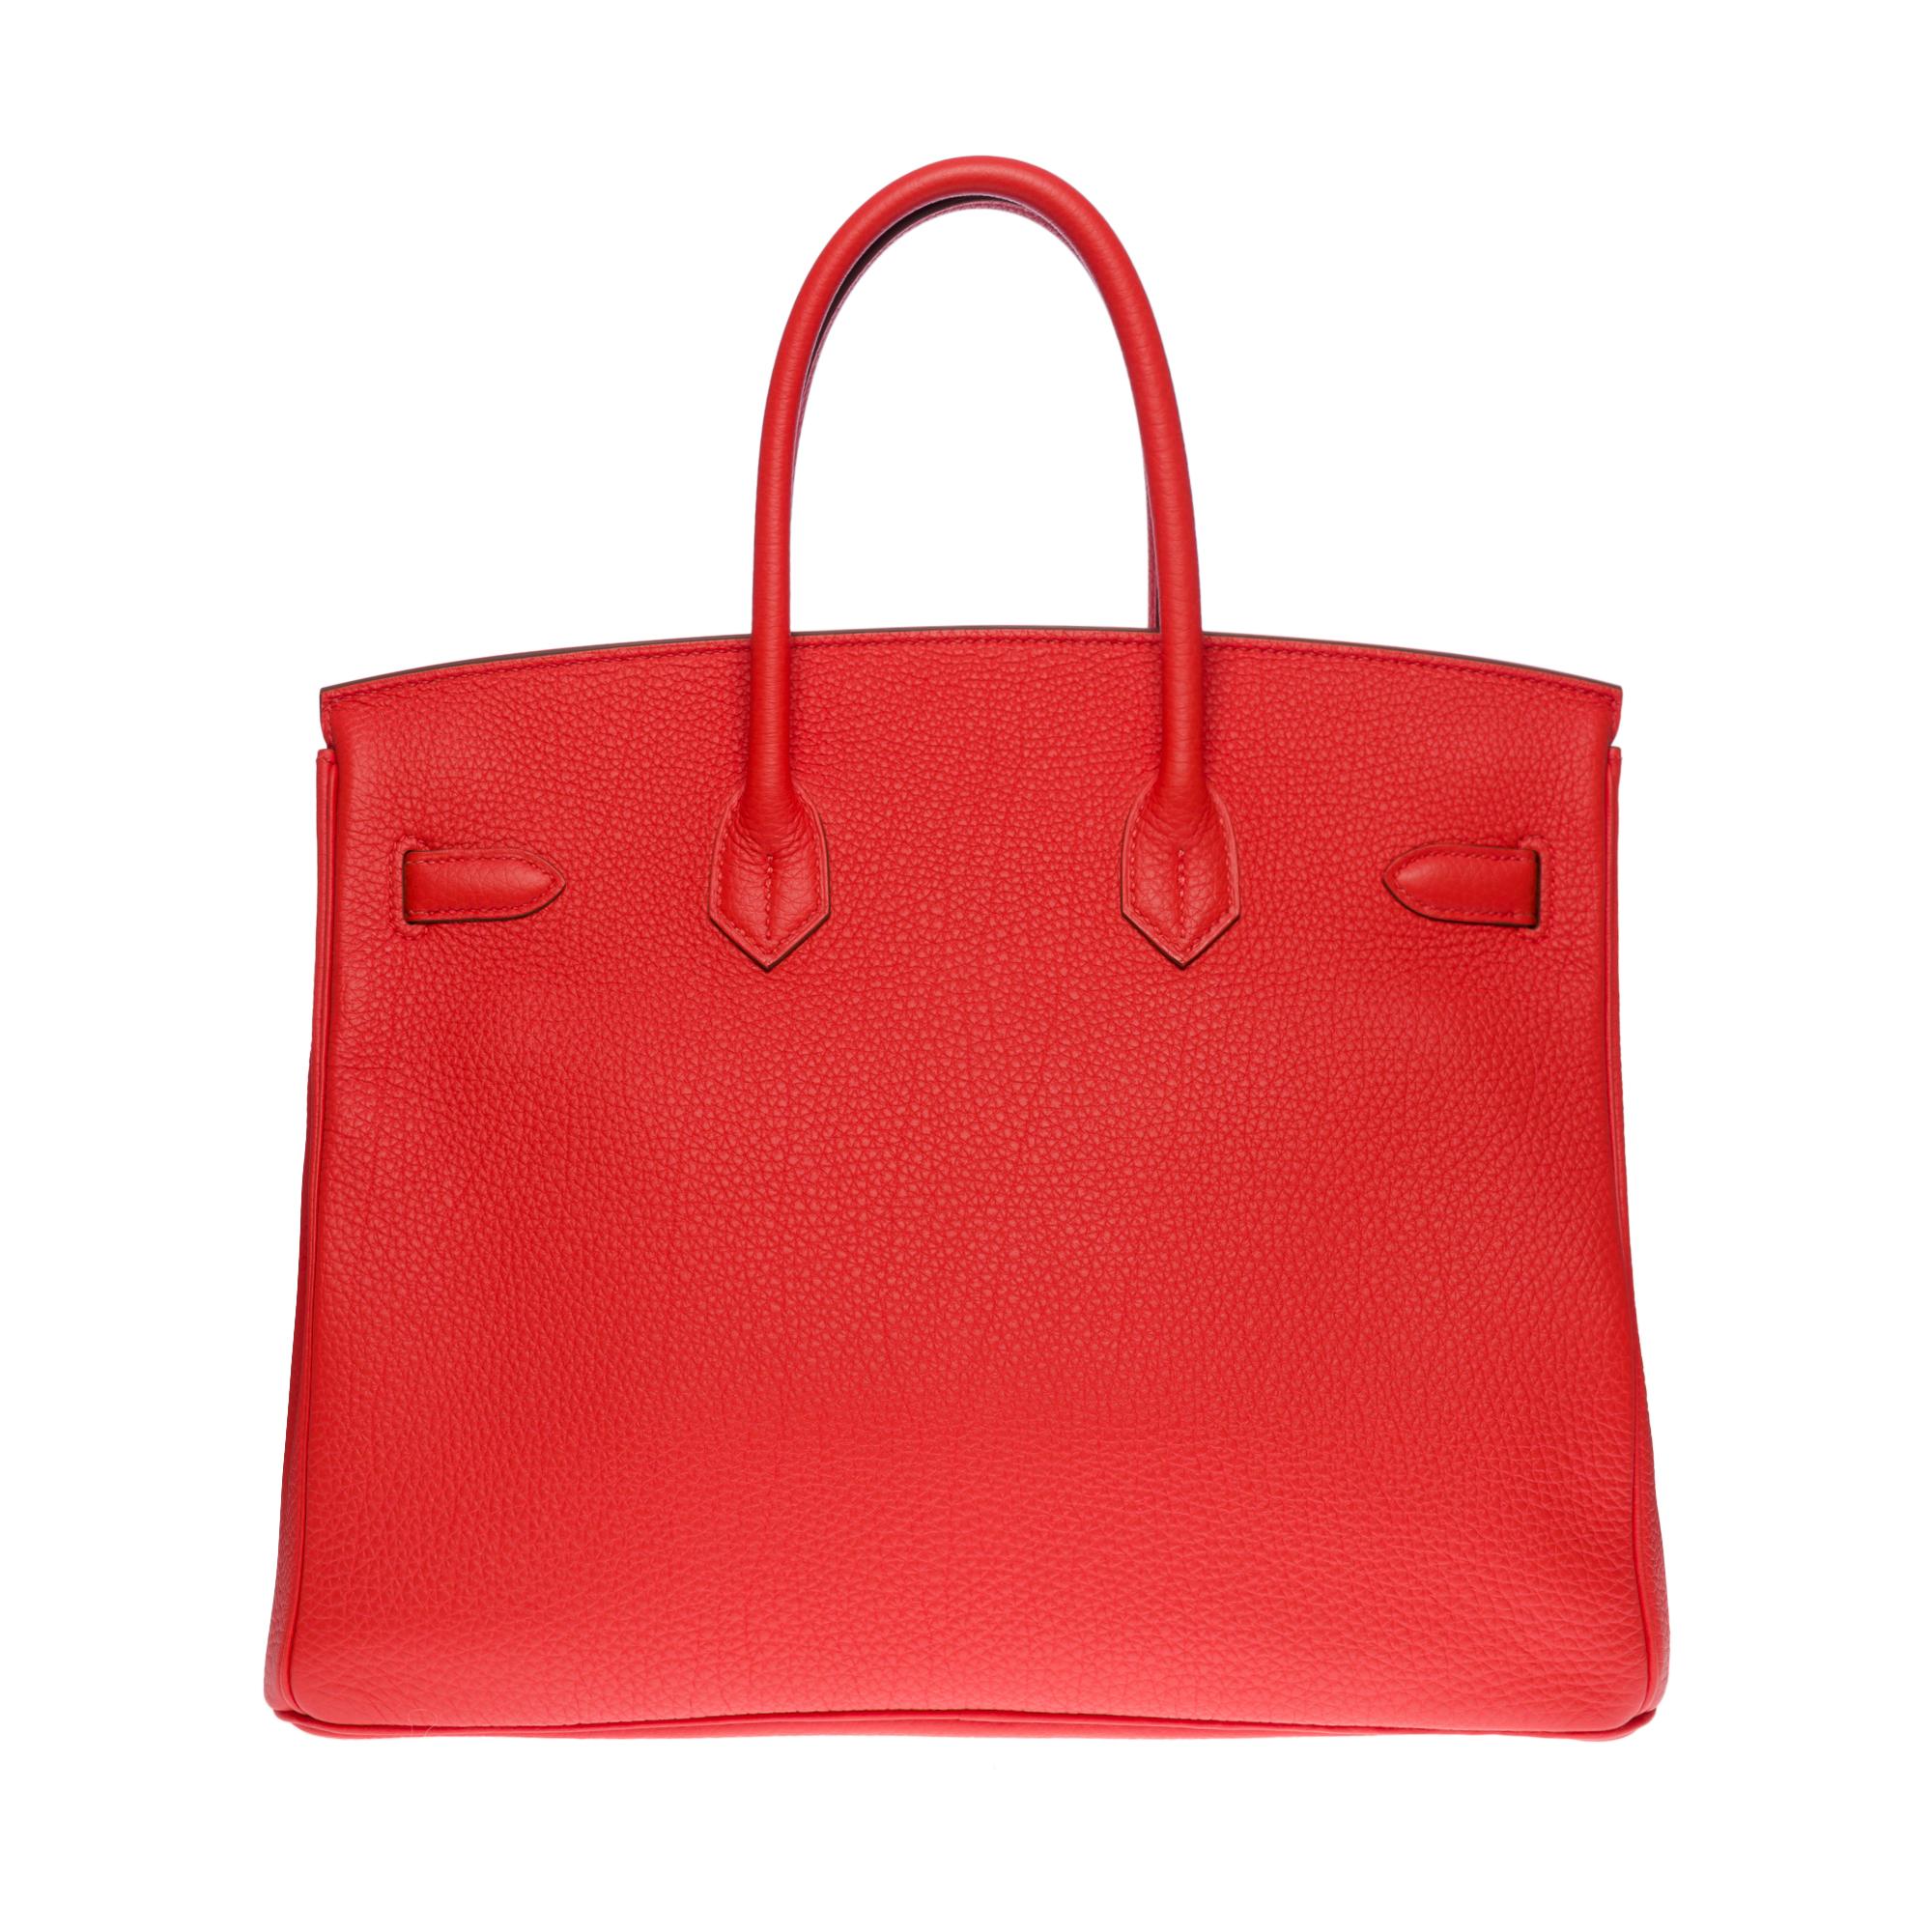 Red Almost New Hermès Birkin 35 handbag in Orange Poppy Togo leather, SHW For Sale